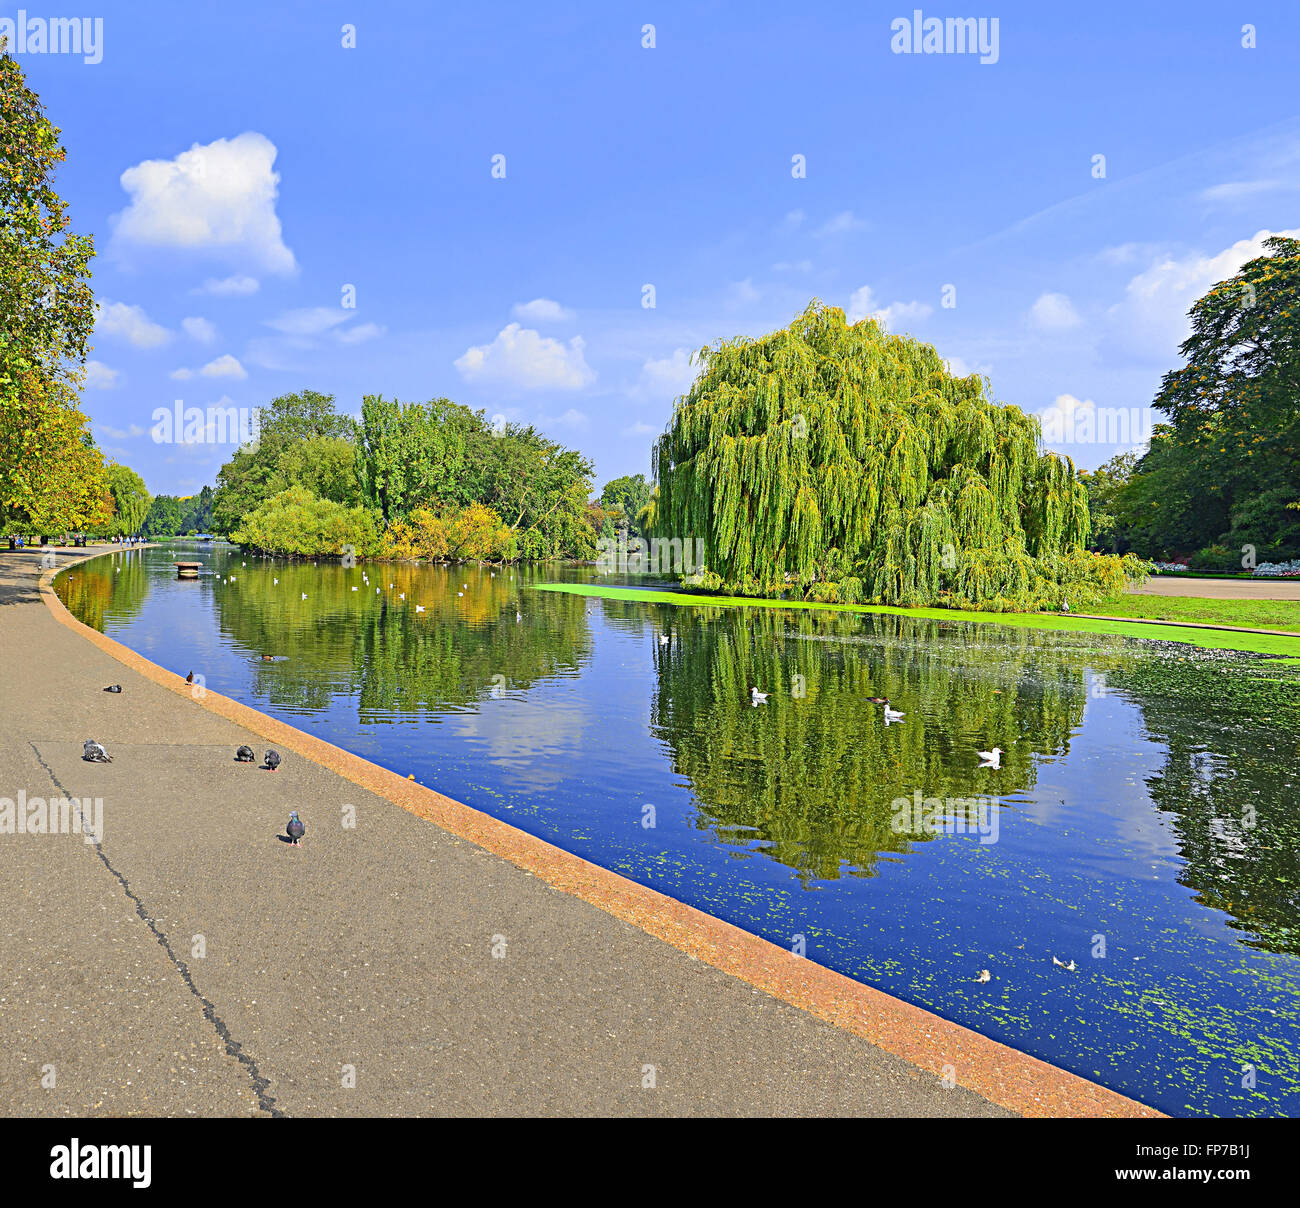 Pond in Regents Park London on a bright September day Stock Photo - Alamy